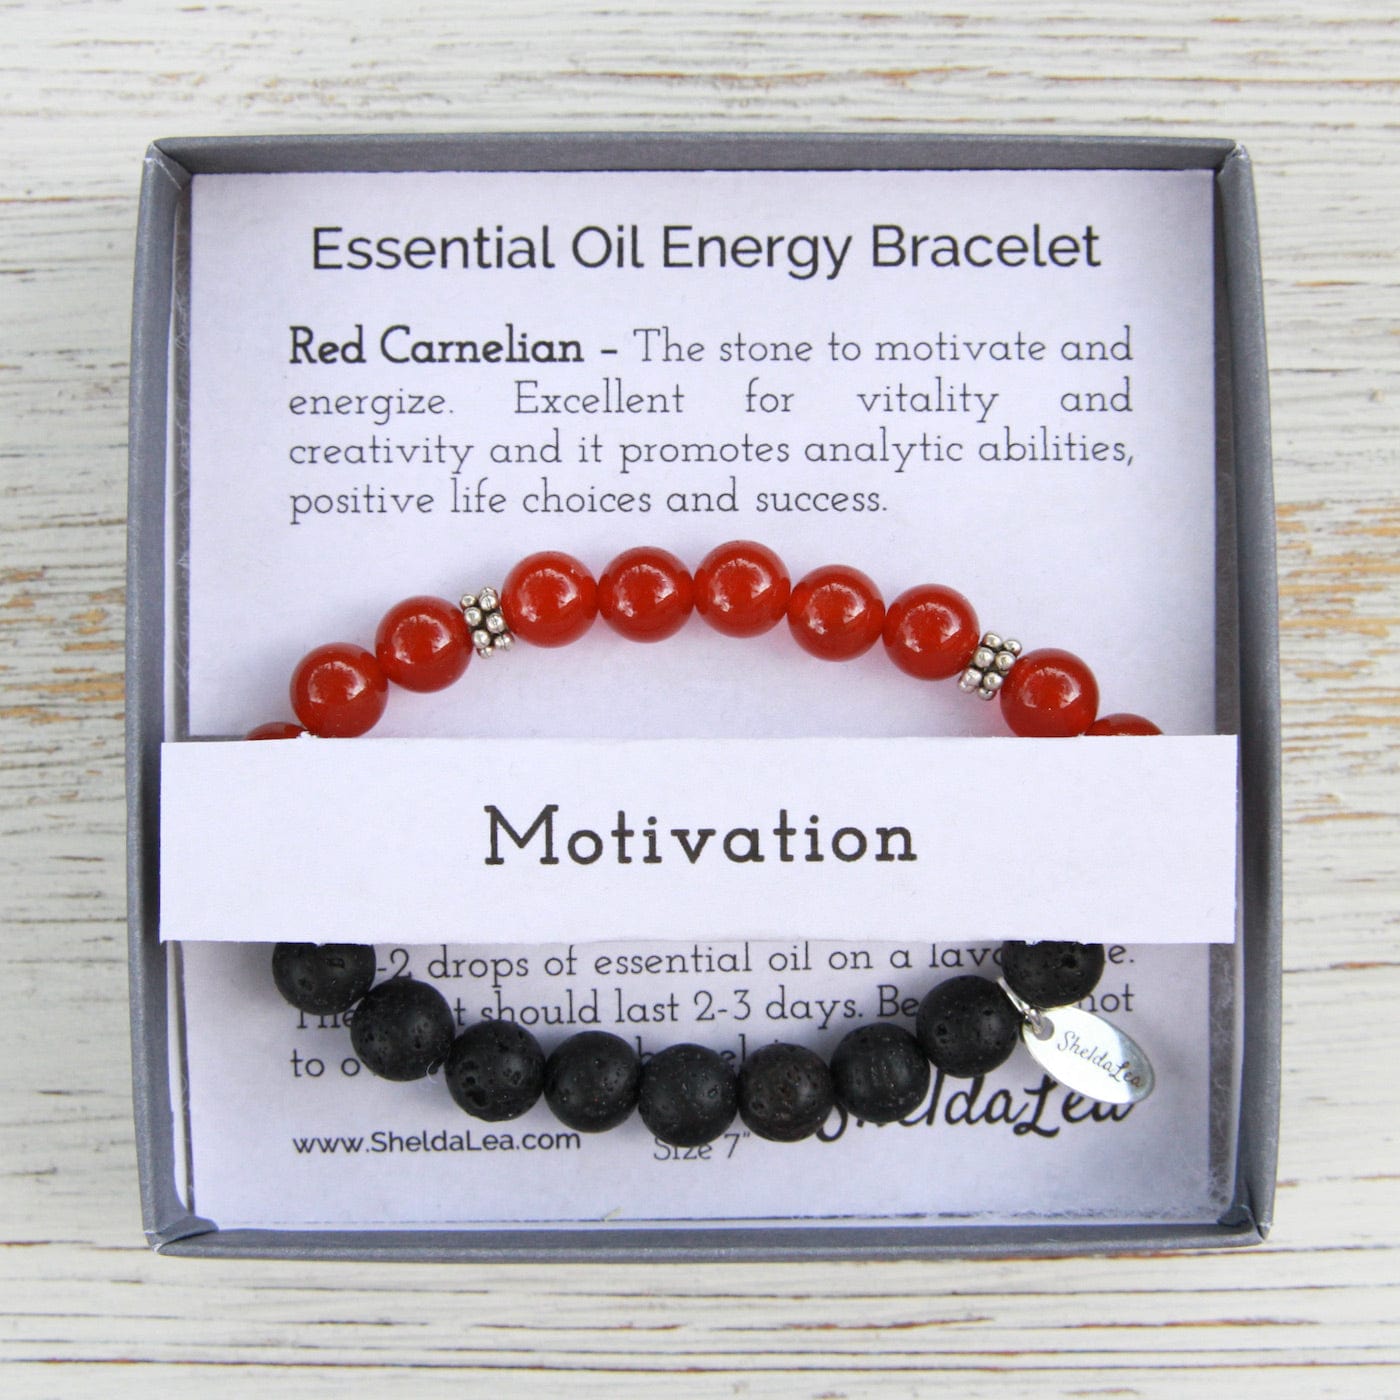 BRC Essential Oil Energy Bracelet - Red Carnelian - Motivation